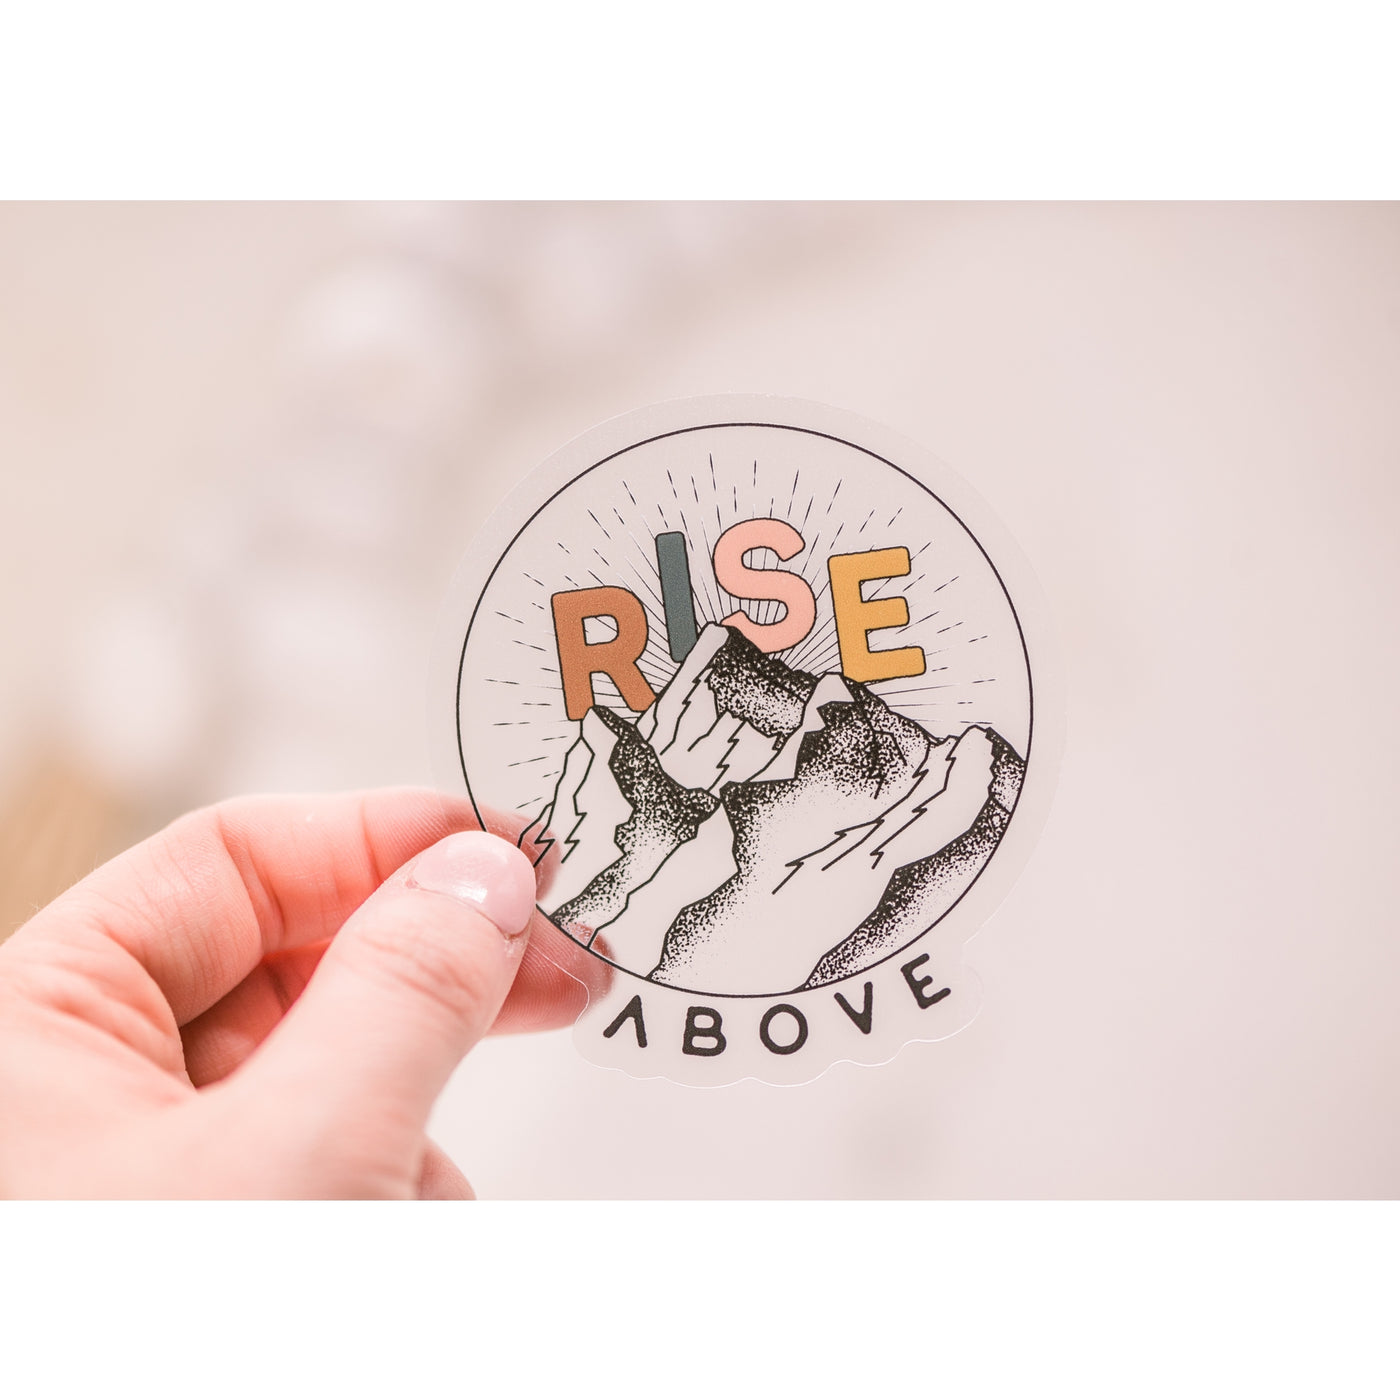 Rise Above Vinyl Sticker